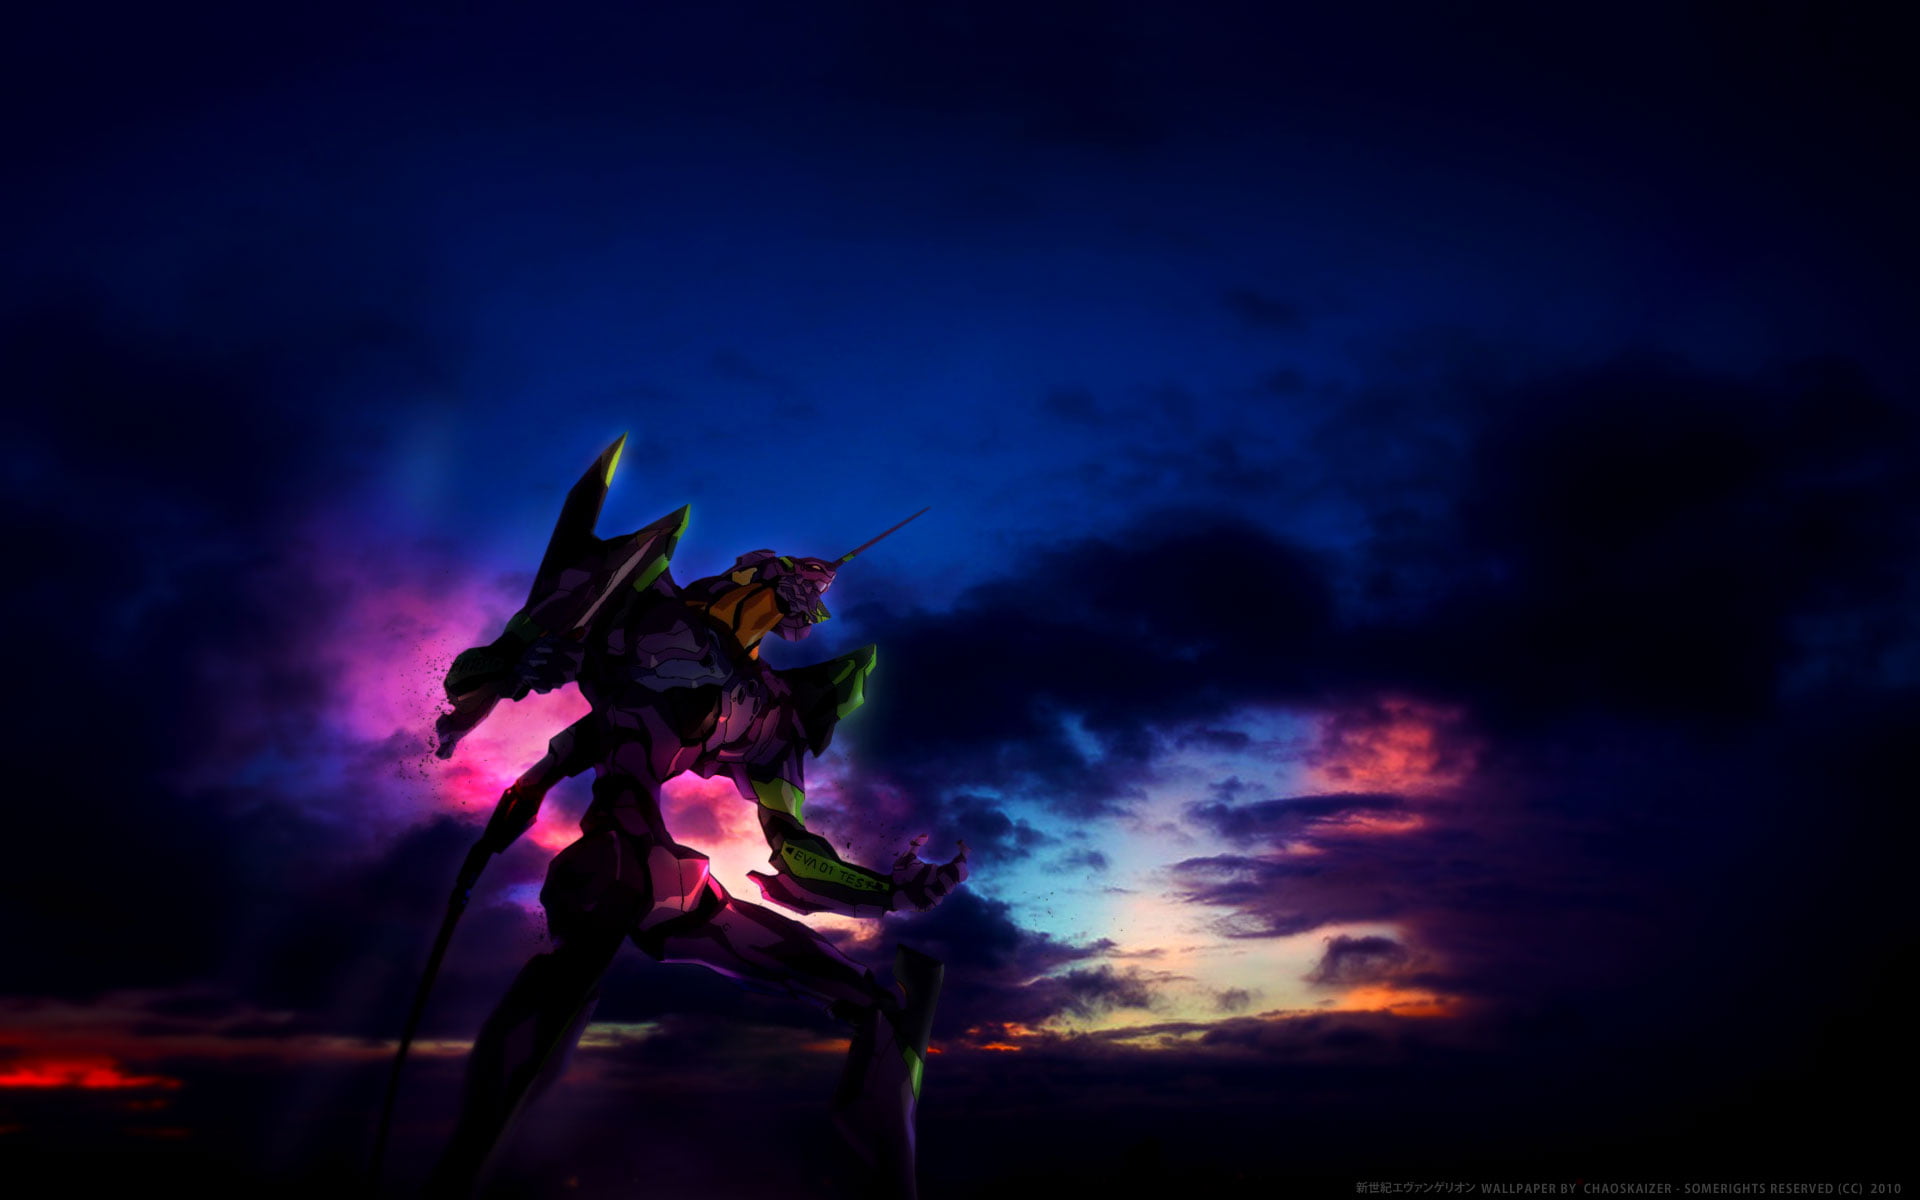 untitled, Neon Genesis Evangelion, EVA Unit 01, cloud - sky, nature